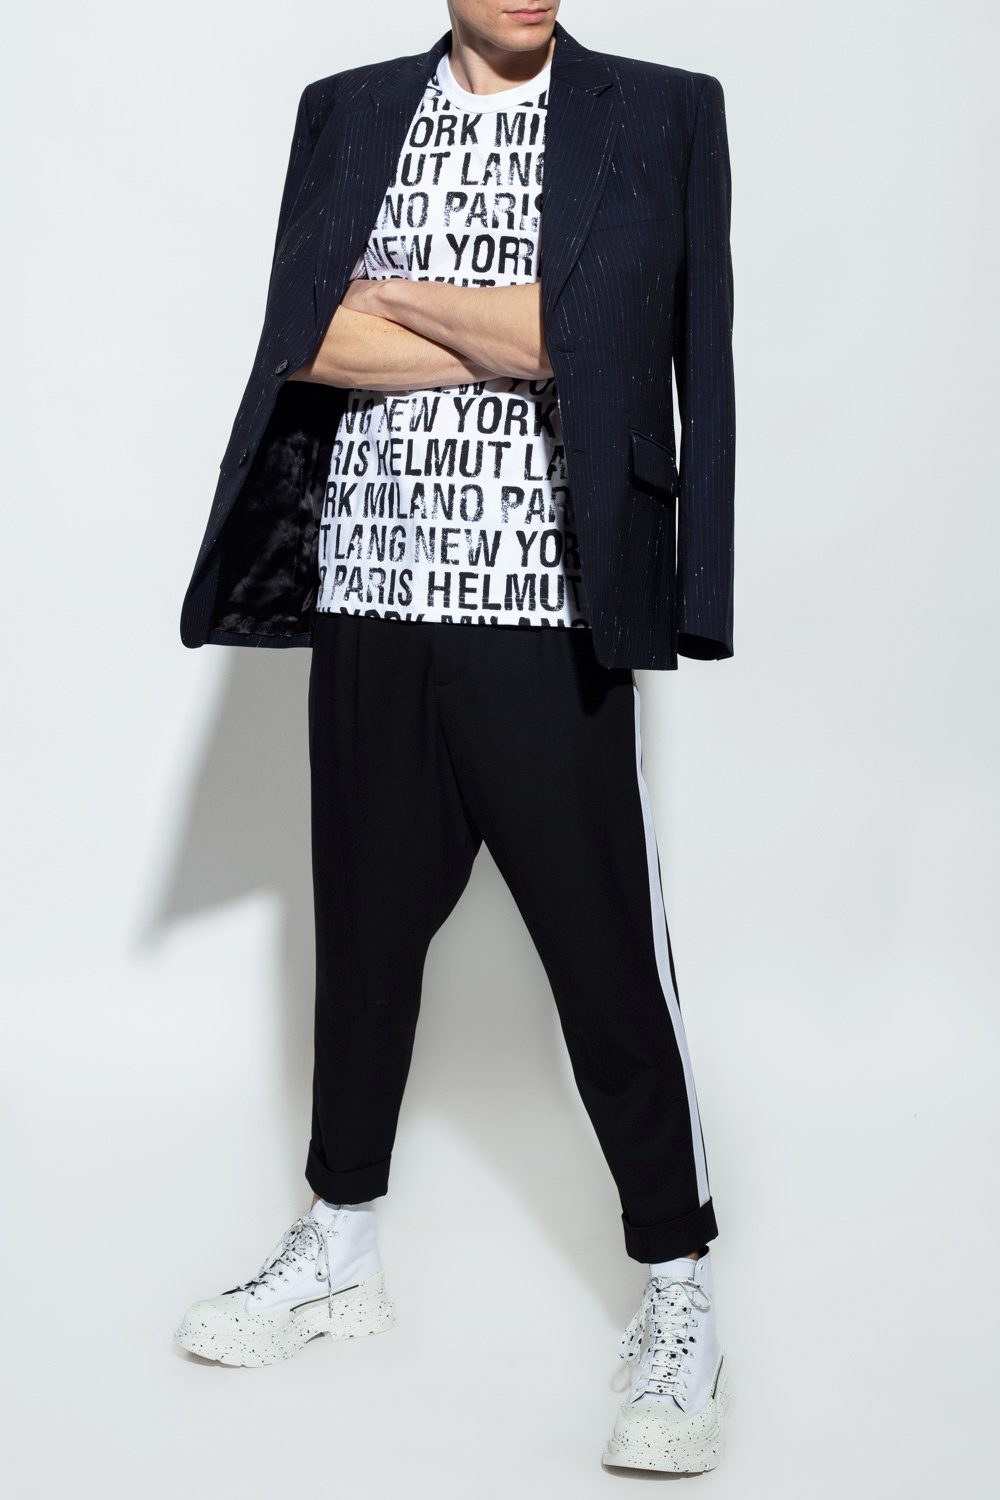 Helmut Lang Adam Lippes Clothing for Women